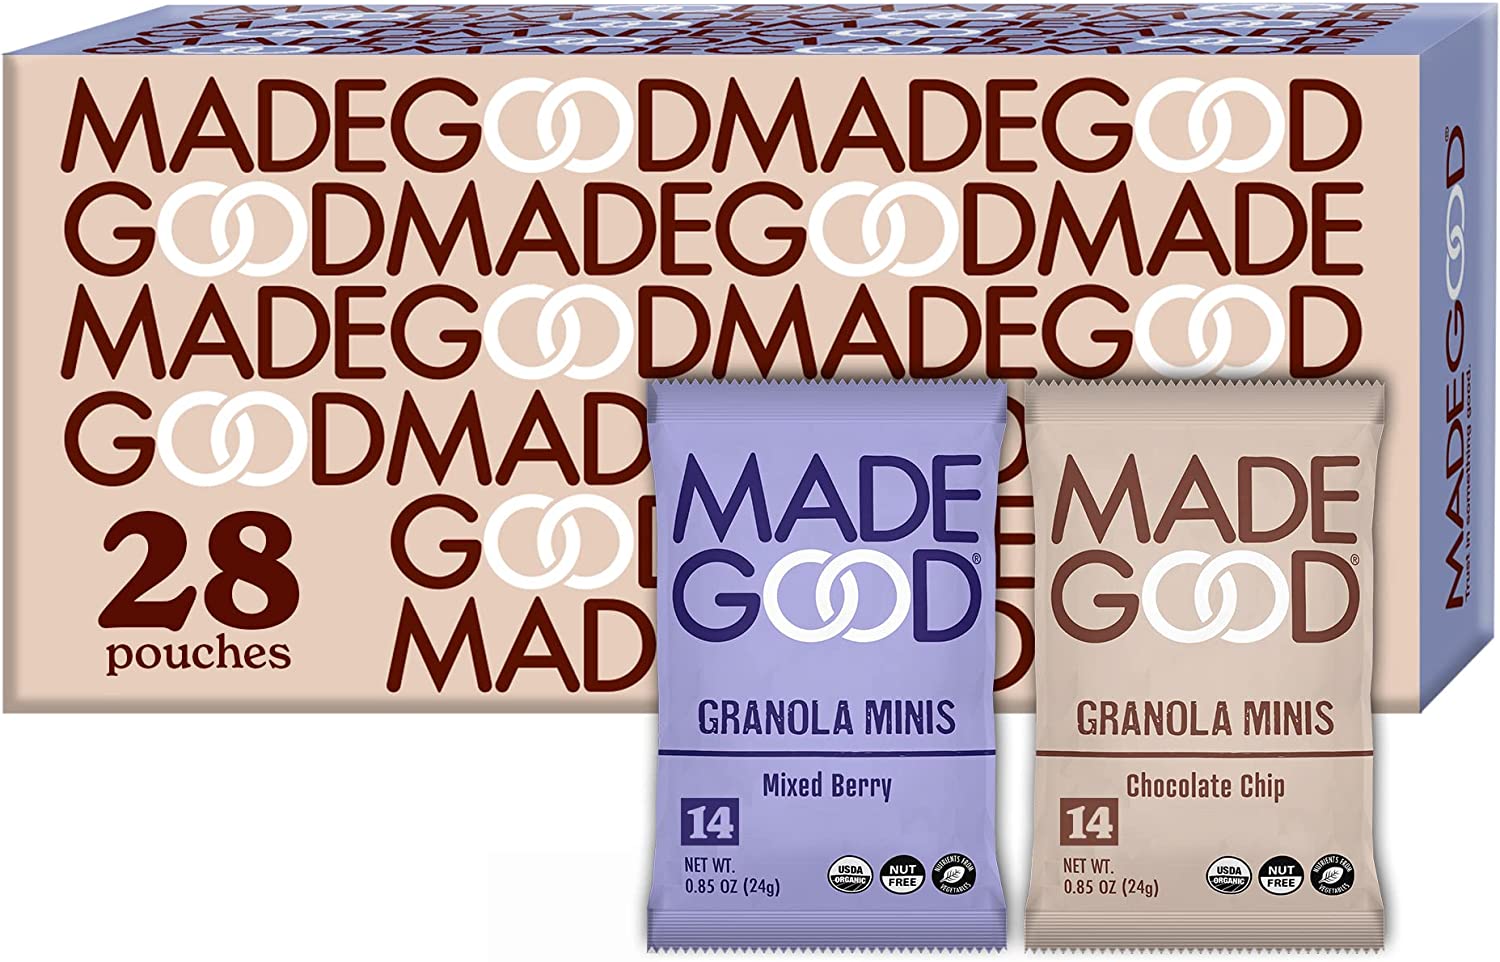 MadeGood Granola Minis Chocolate Chip & Mixed Berry 28pk